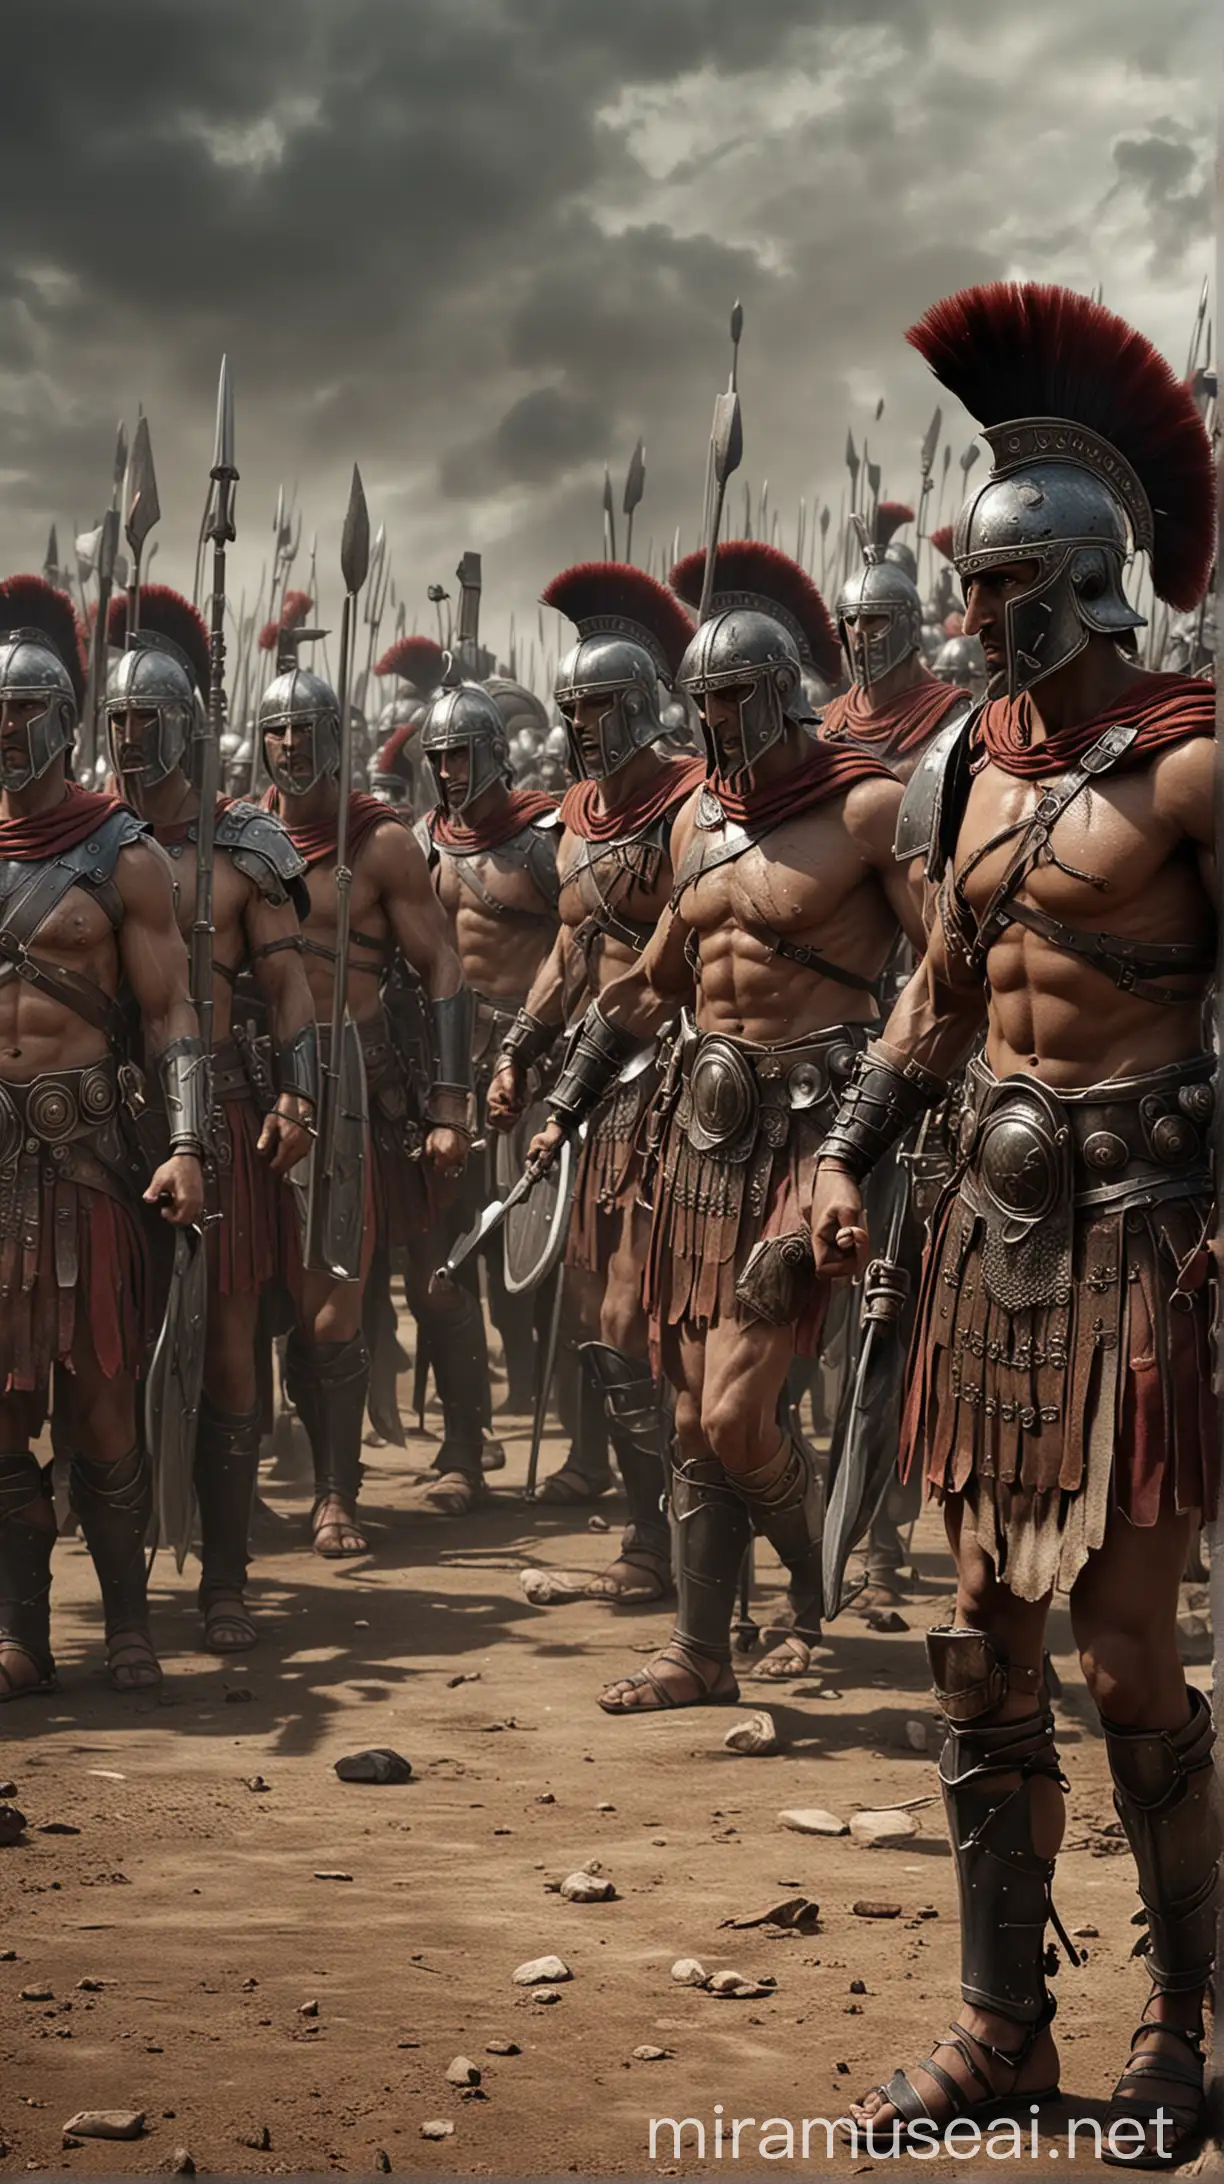 Elite Spartan Hoplites Maintain Unbreakable Phalanx Formation in Battle